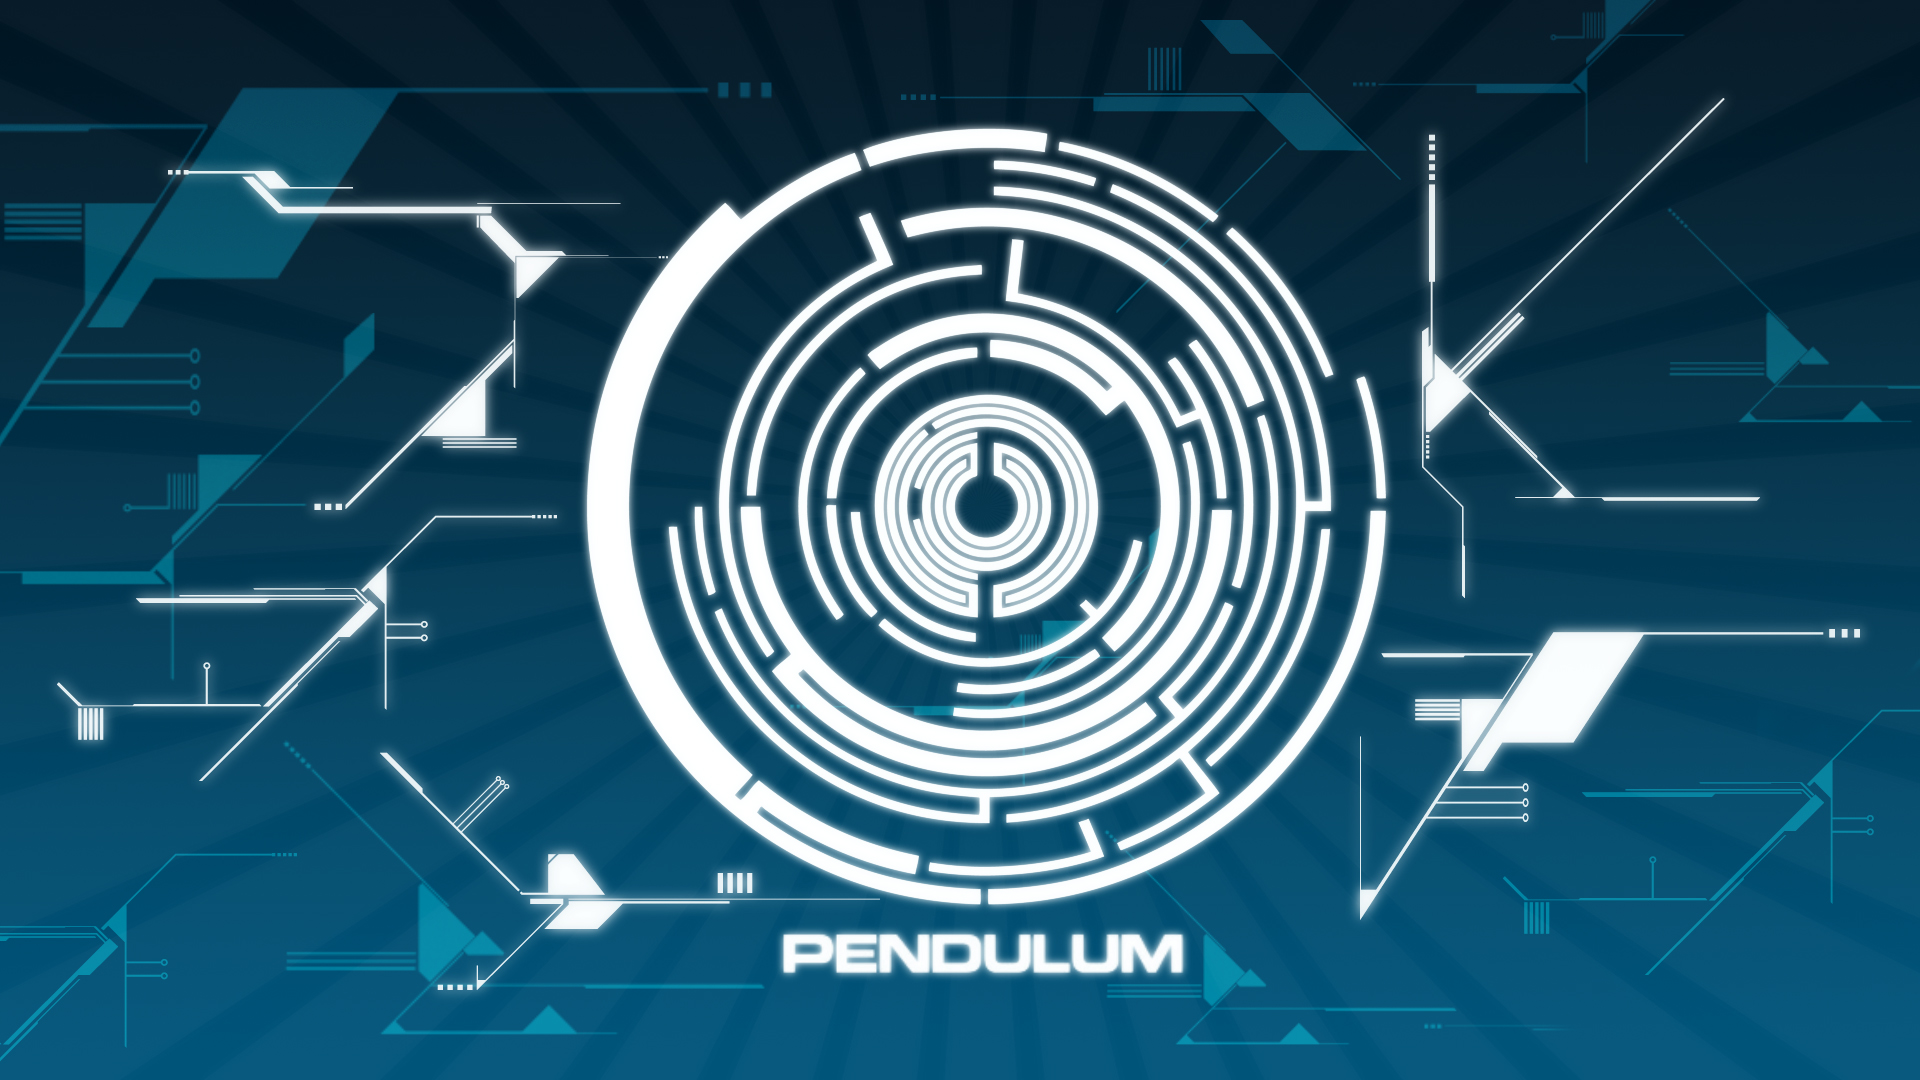 Pendulum Wallpaper Background Image